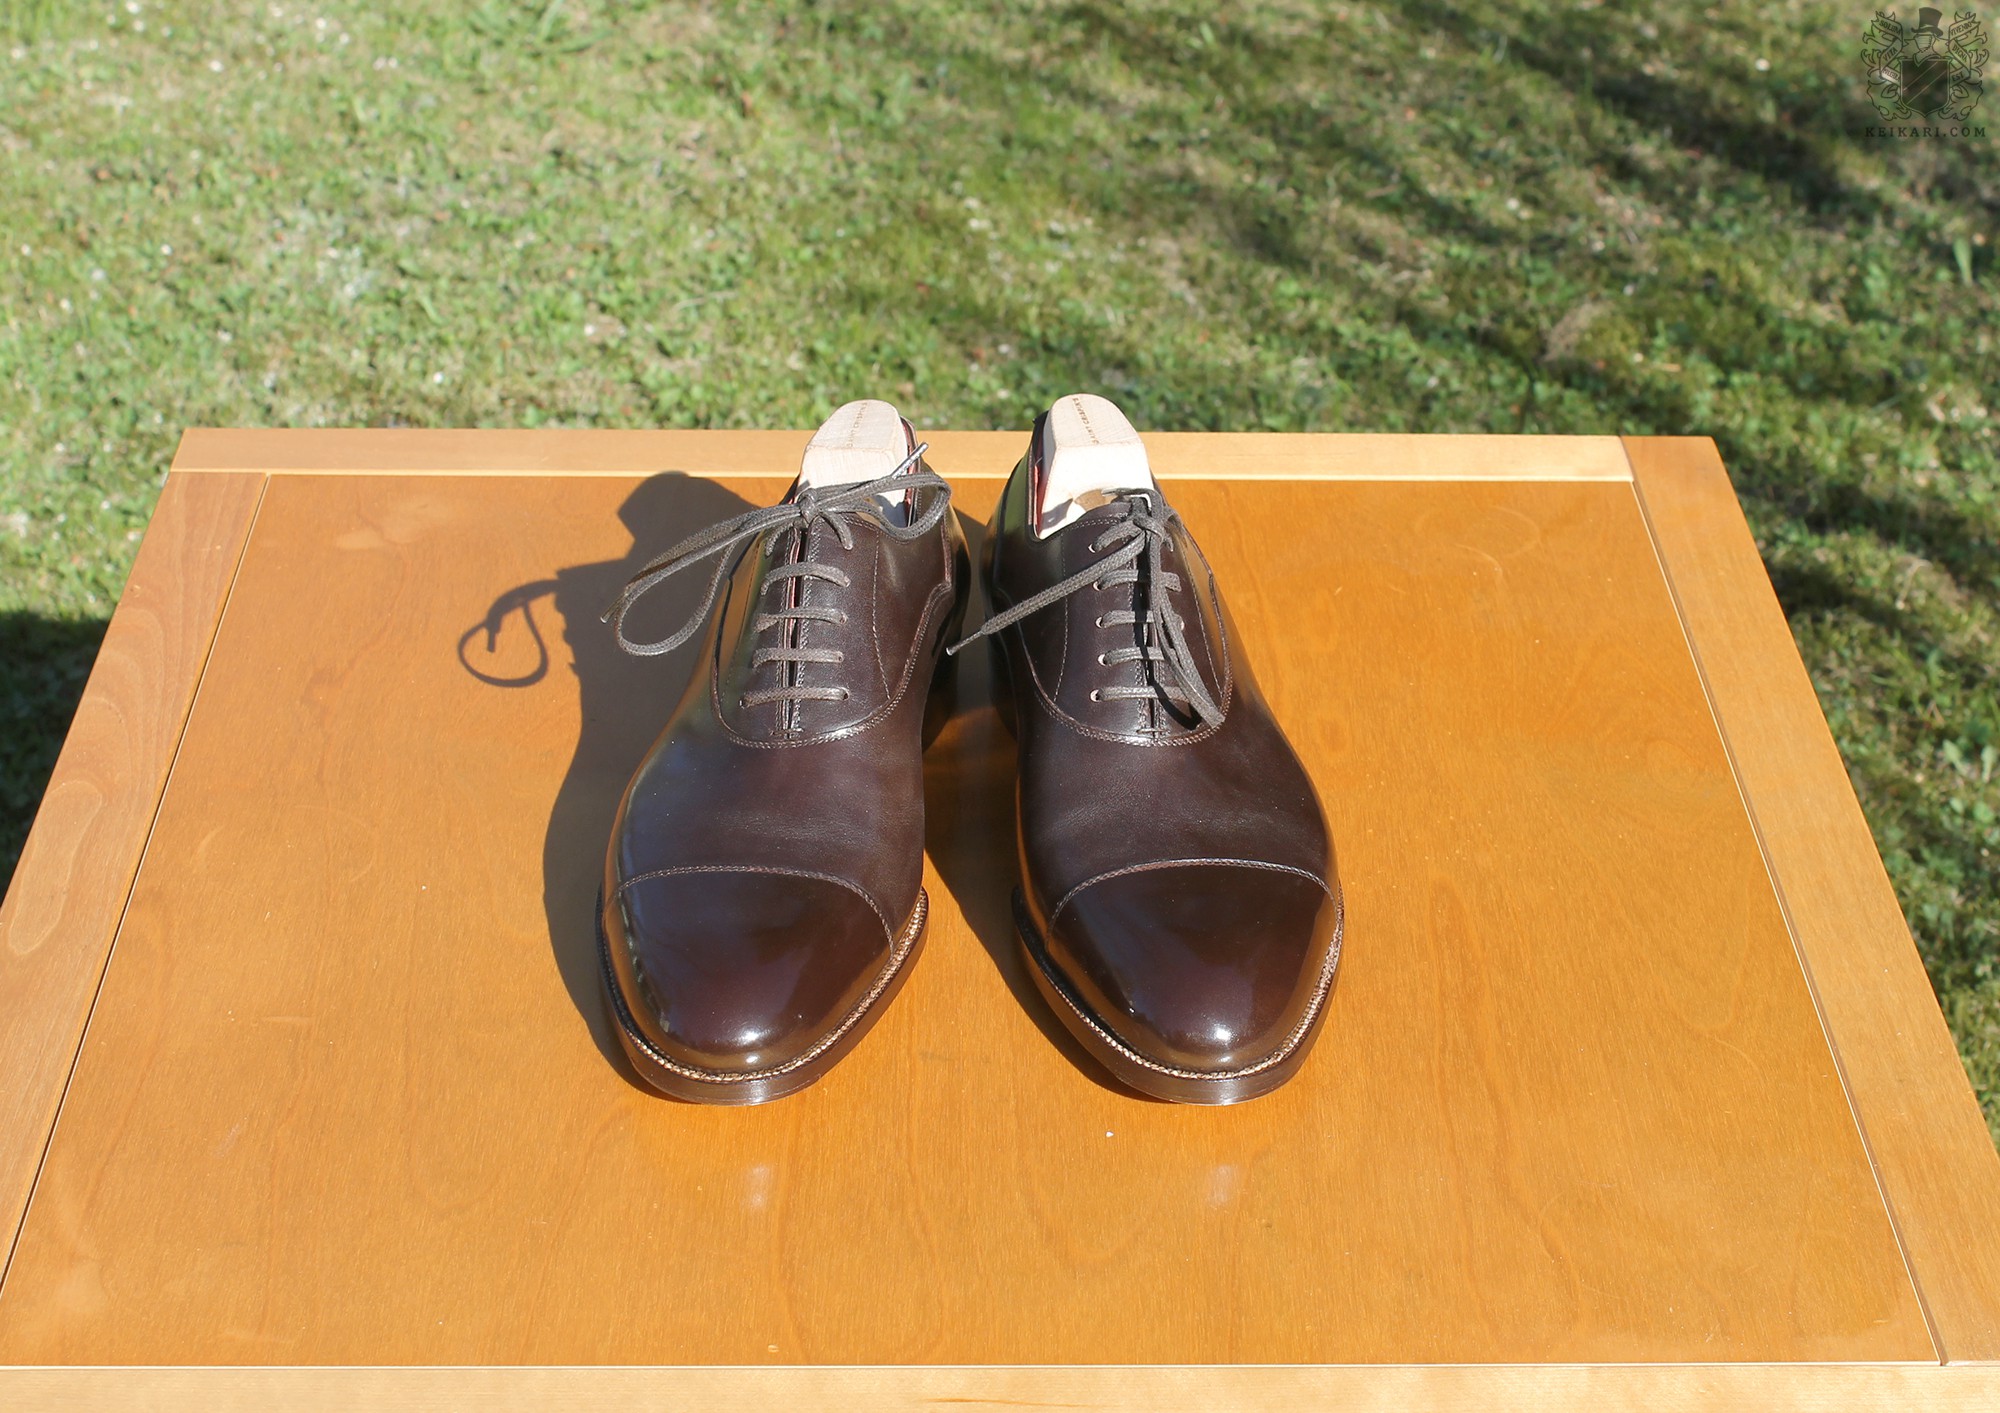 Anatomy_of_Saint_Crispins_shoes_at_Keikari_dot_com03.jpg